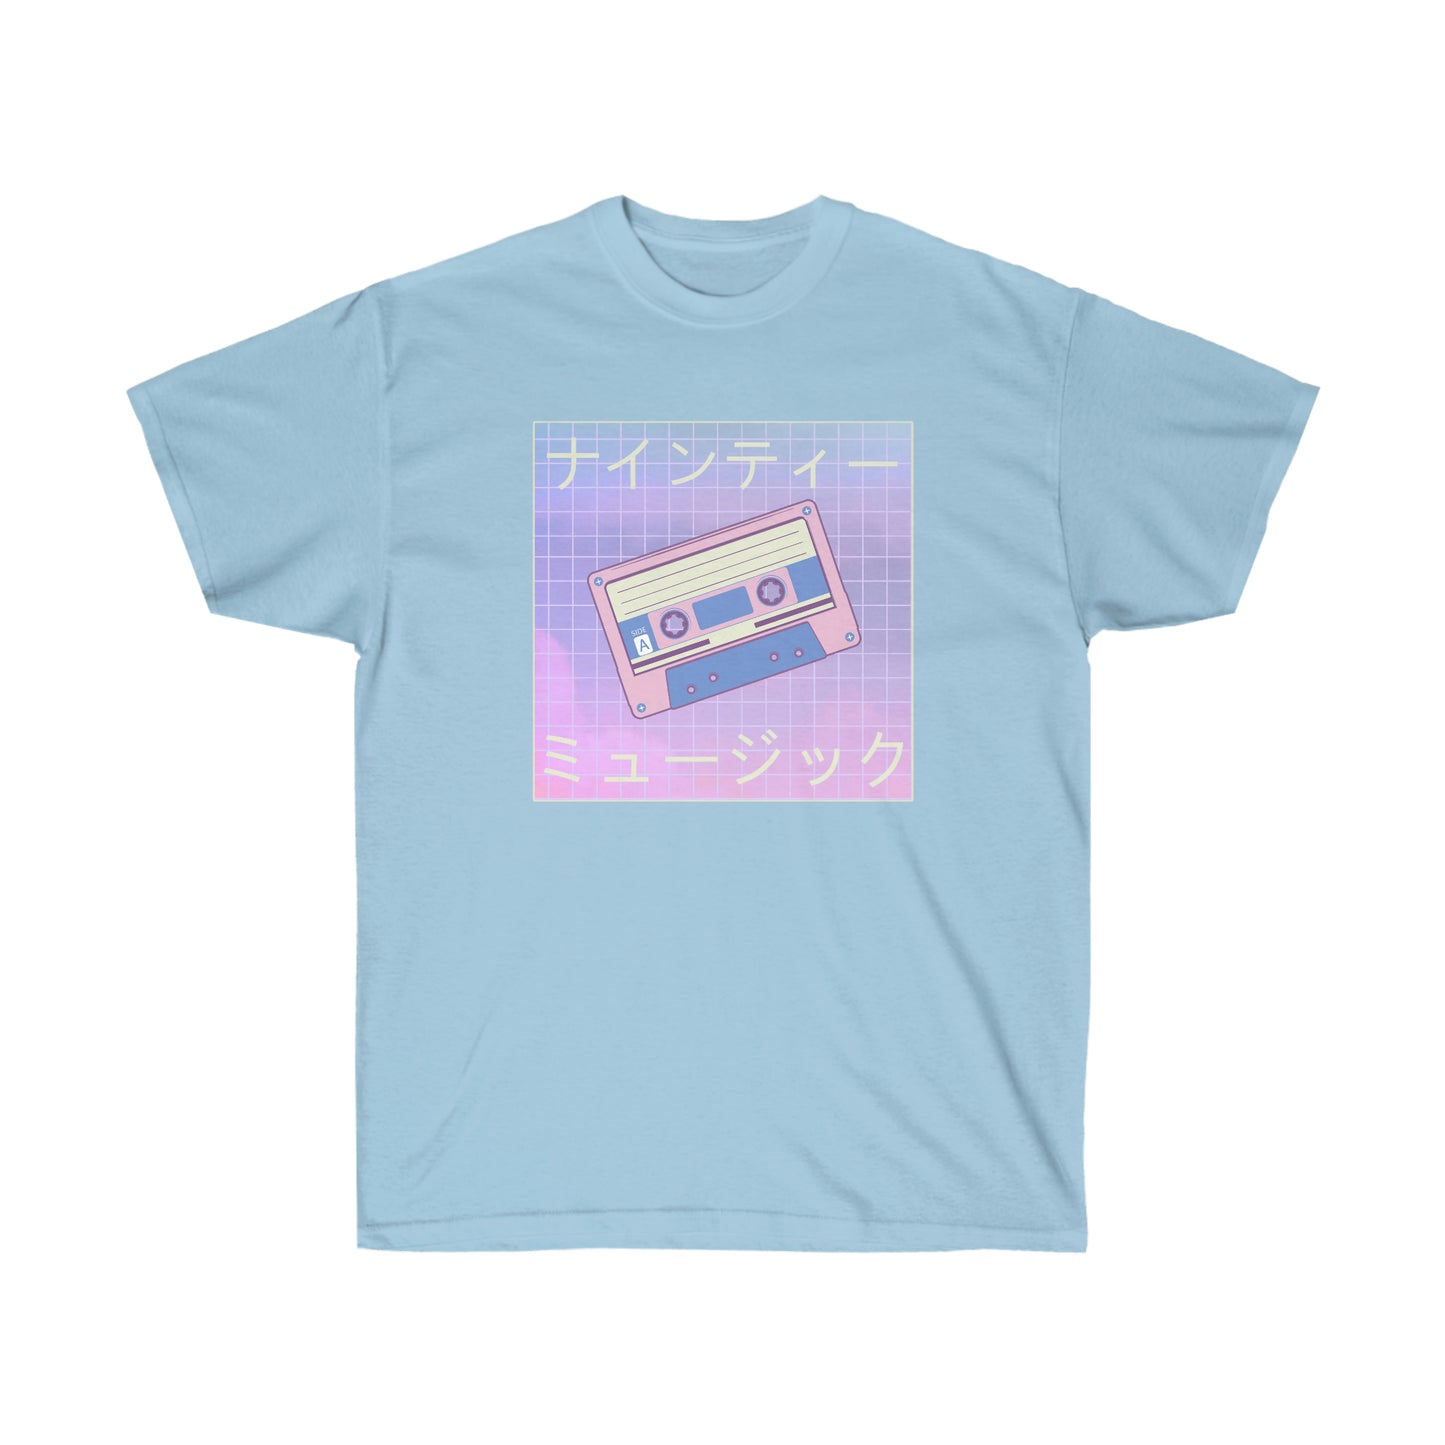 Vaporwave Mixtape shirt, Japanese Aesthetic, vapor wave shirt Pastel Synthwave tee, Japan Street Wear Grunge Clothing Retrofuturism